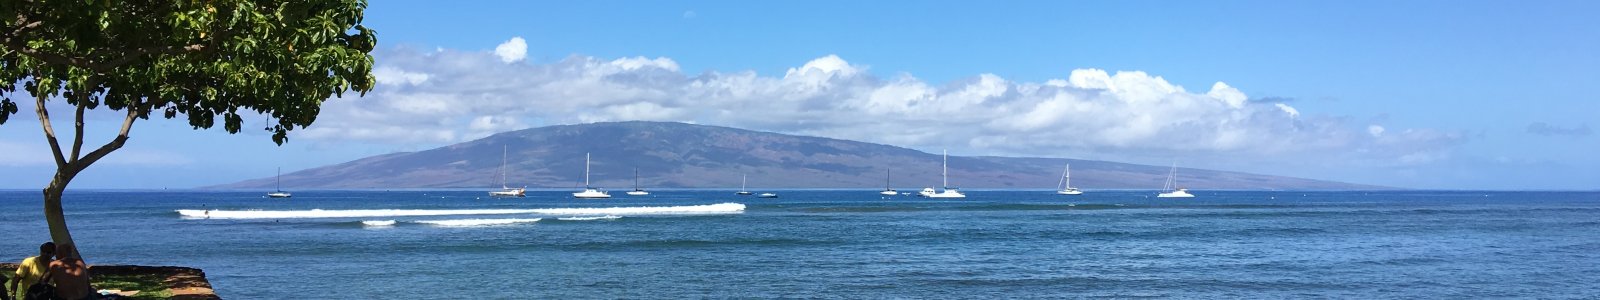 Summer Events on Maui